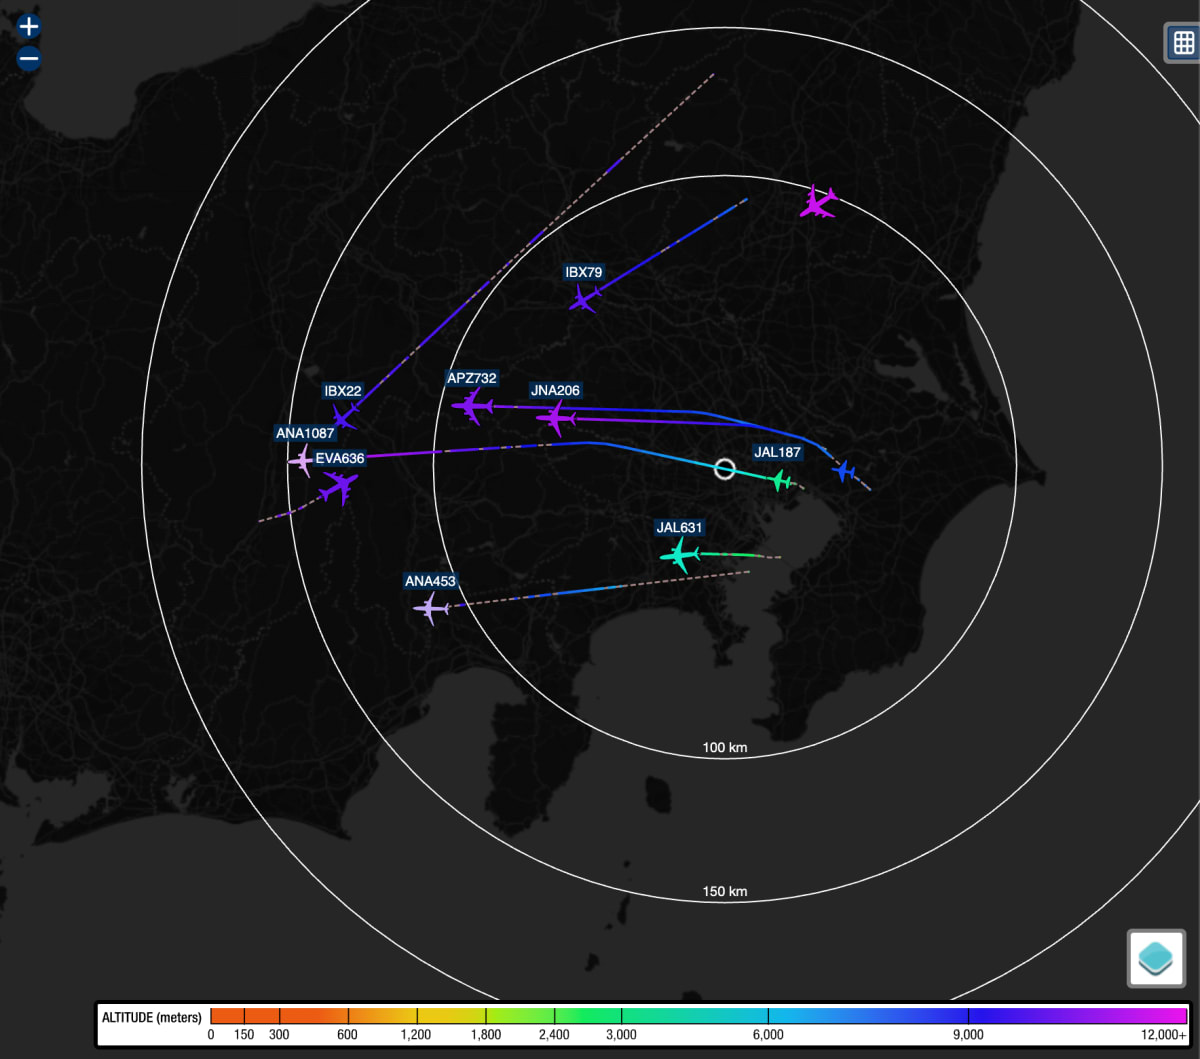 dump1090のWebインターフェース画面。受信した航空機の位置が地図上にプロットされる。